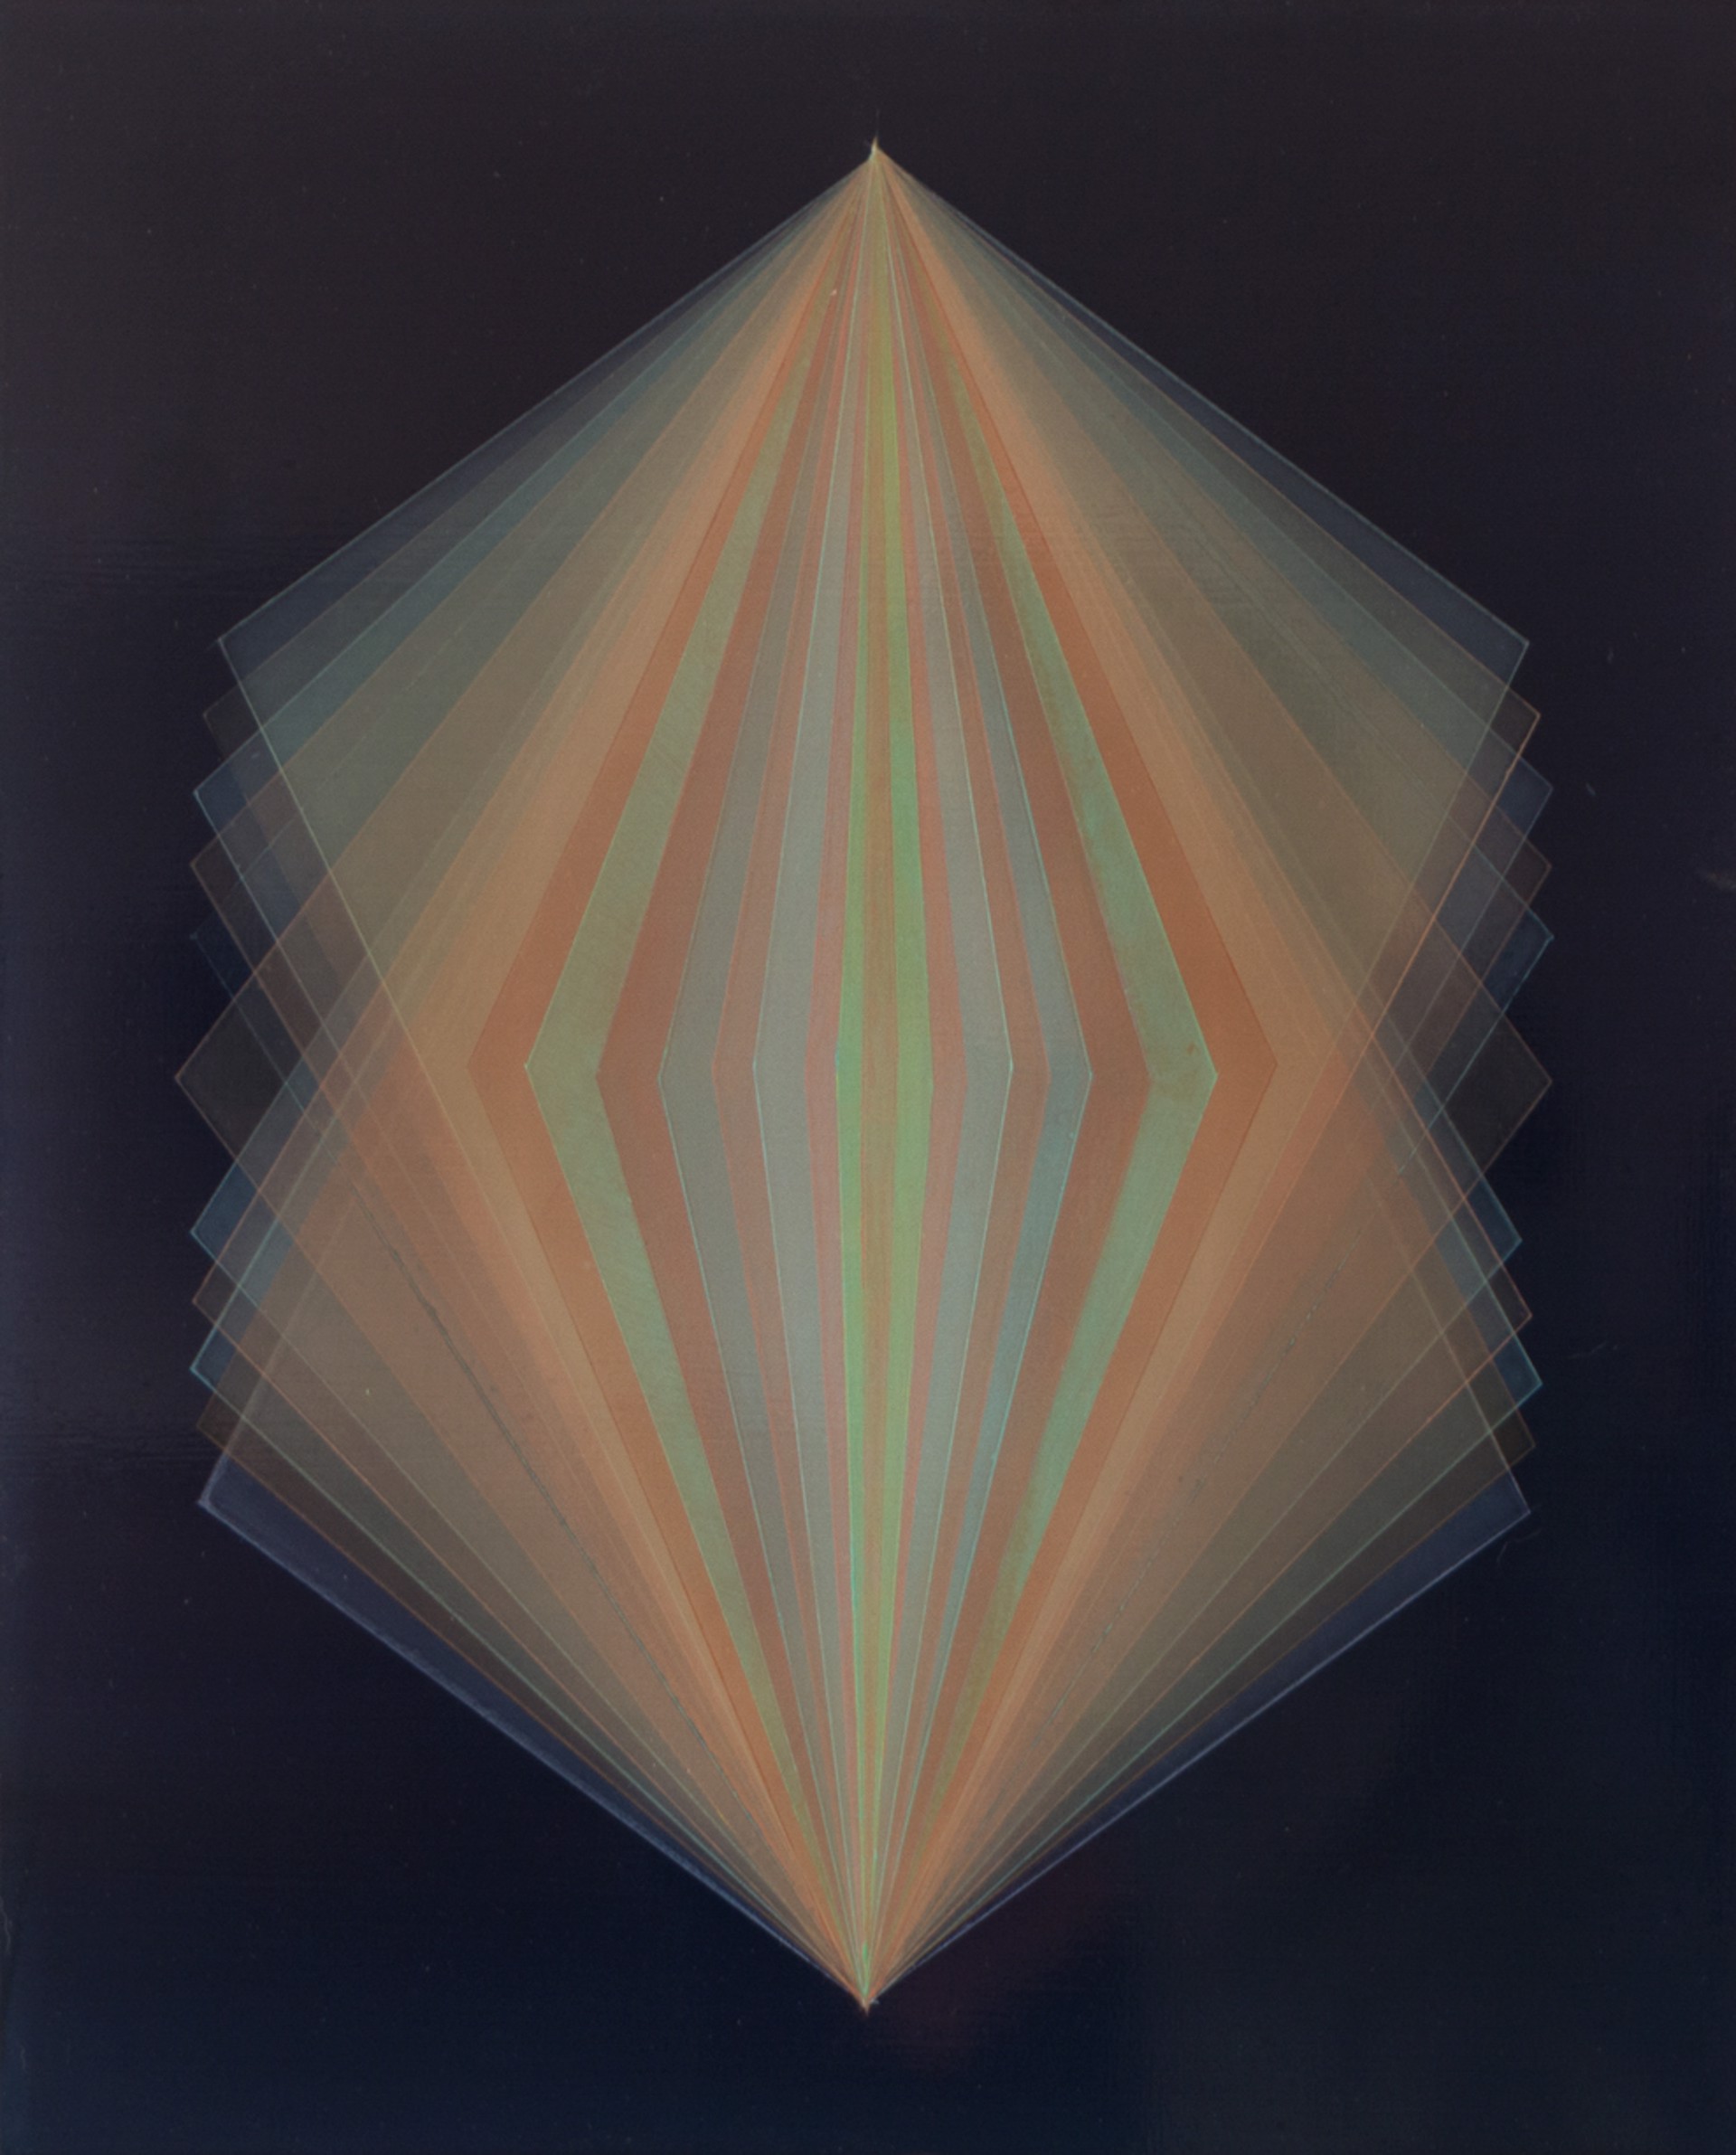 Prism by Bernadette Jiyong Frank